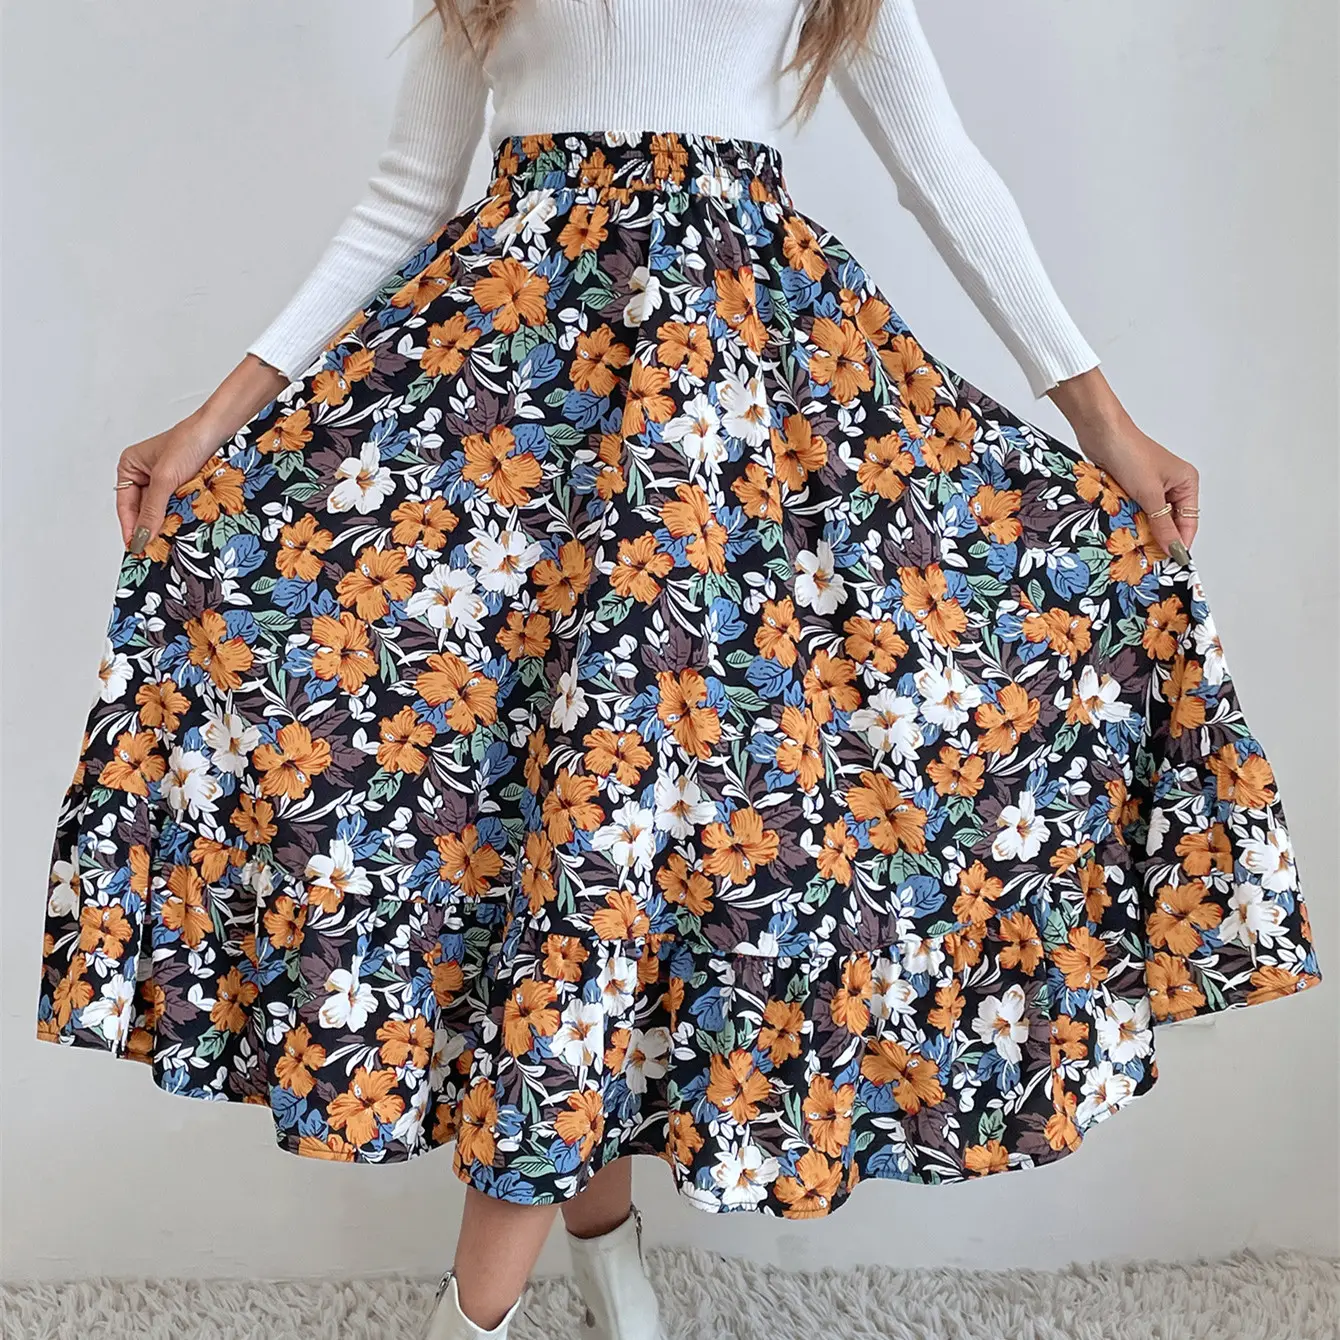 Vintage Women Elegant Floral Skirt High Waist Big Swing Summer A-line Dress New Lady Long Casual Skirt Woman